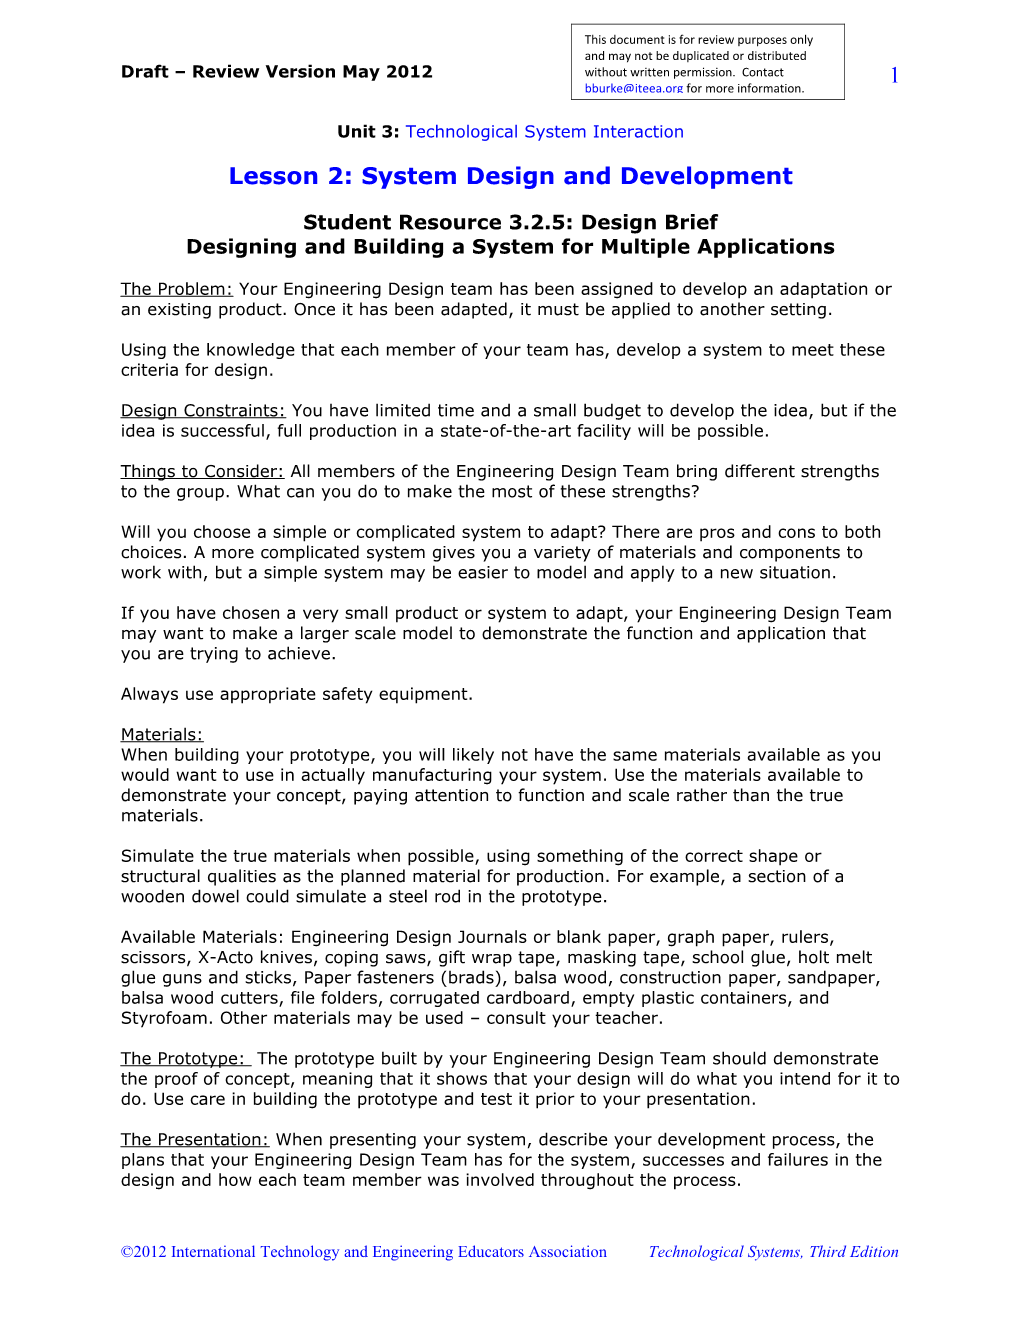 Lesson 2:System Design and Development